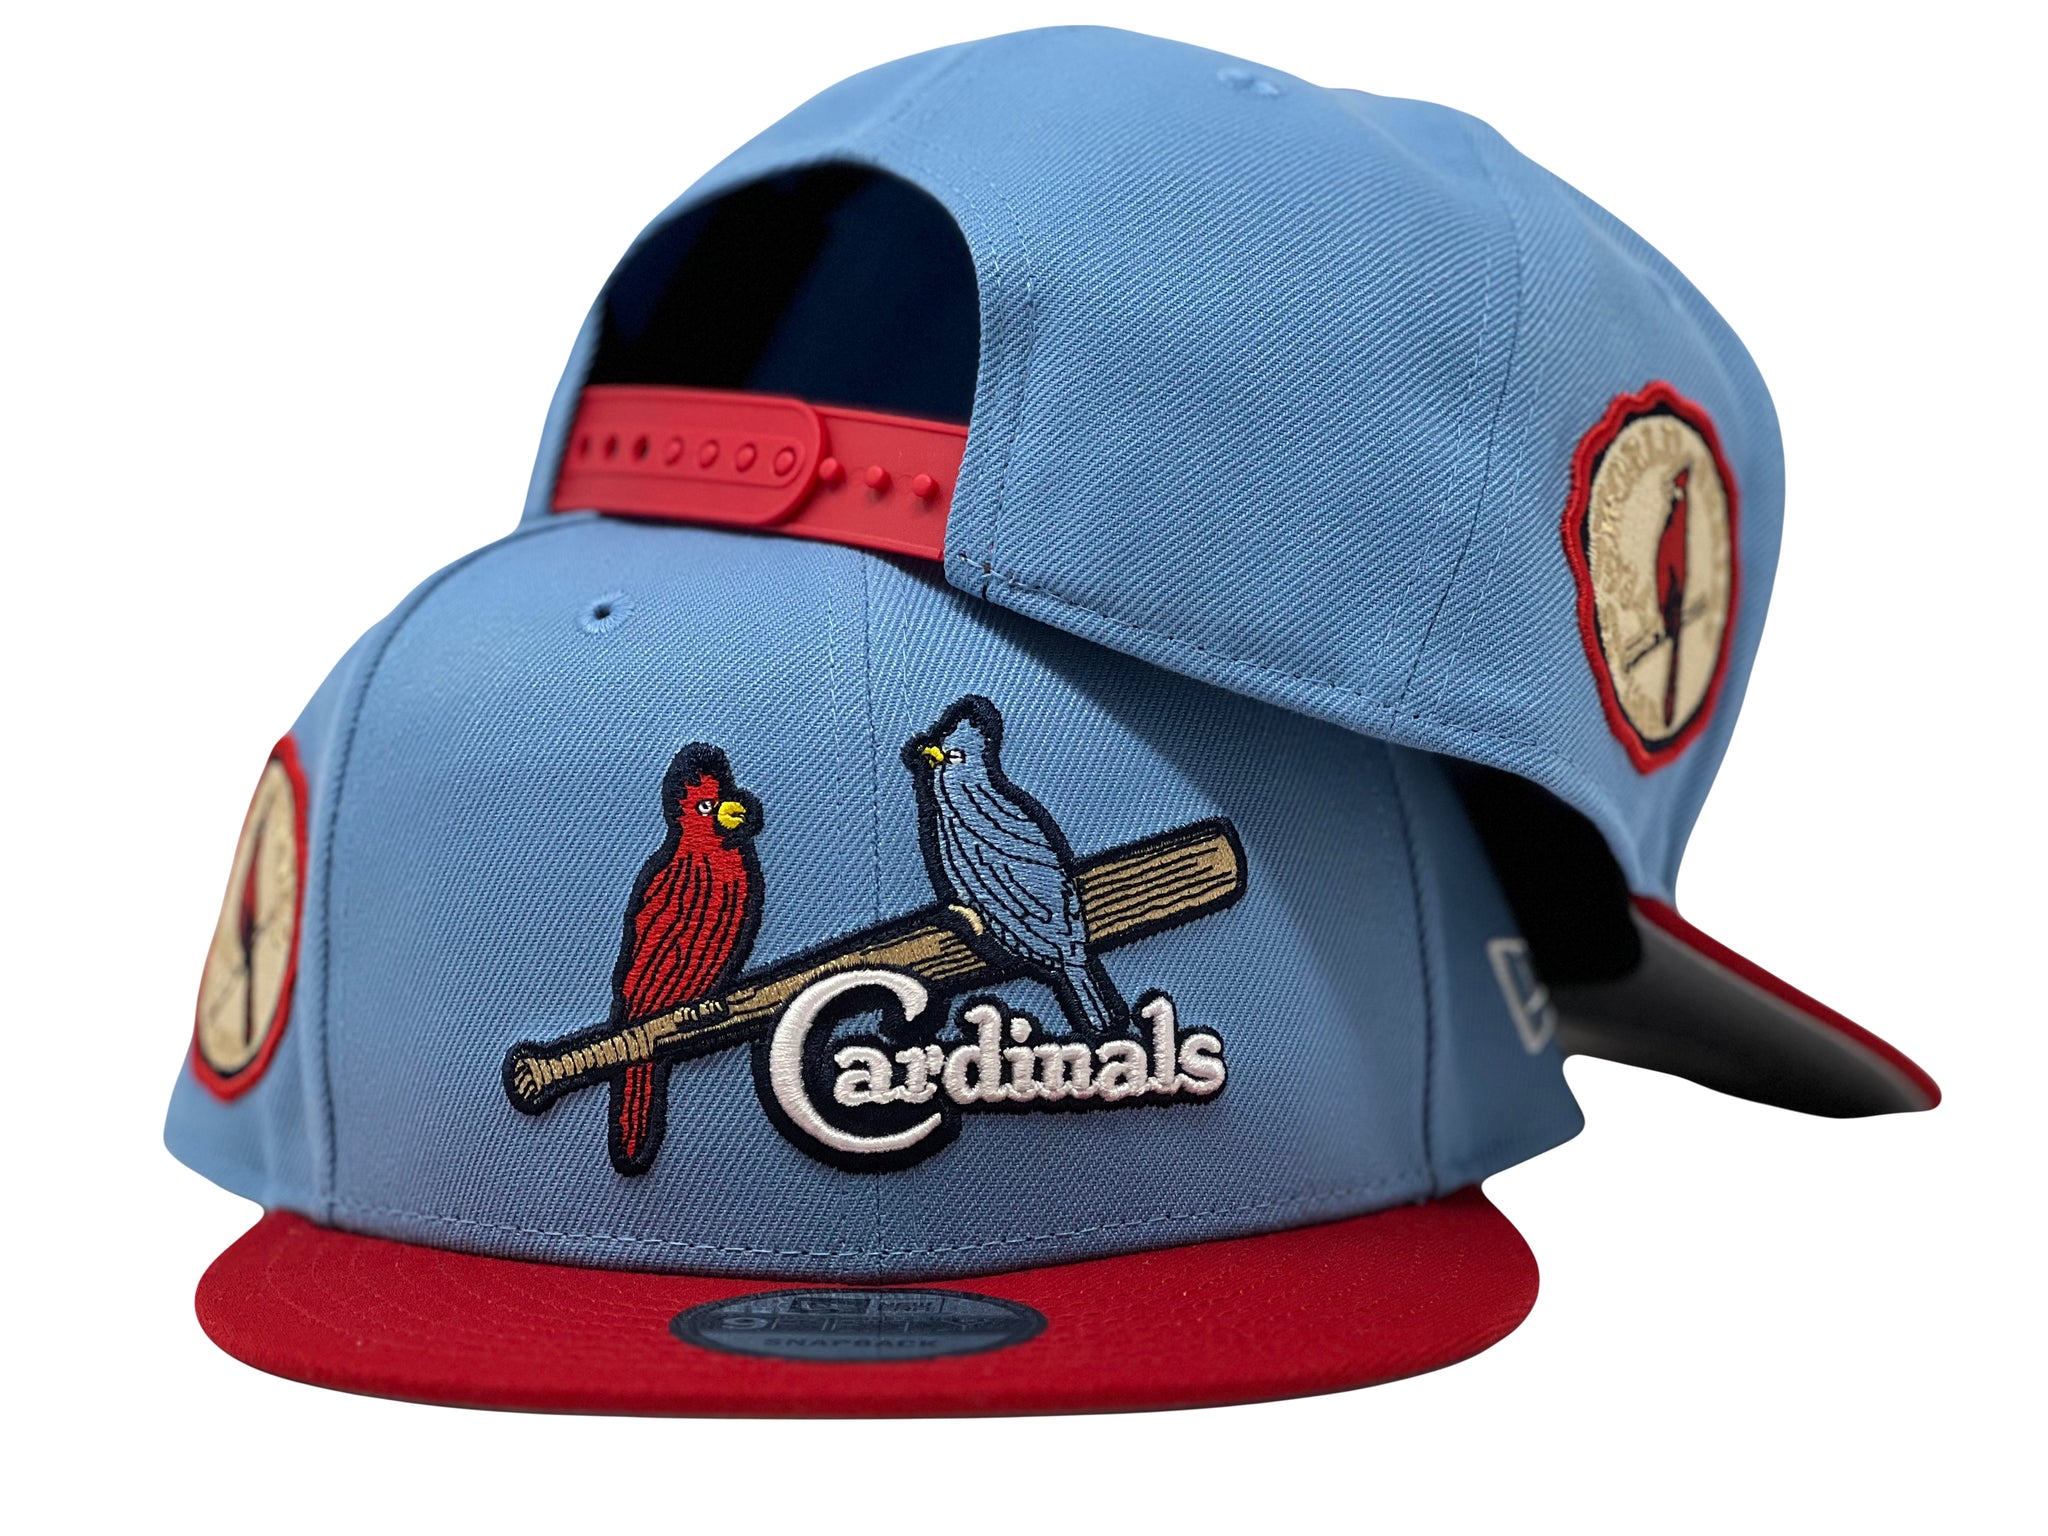 New Era New Jersey Cardinals Snapback Baseball Hat Made in USA STL Cardinals